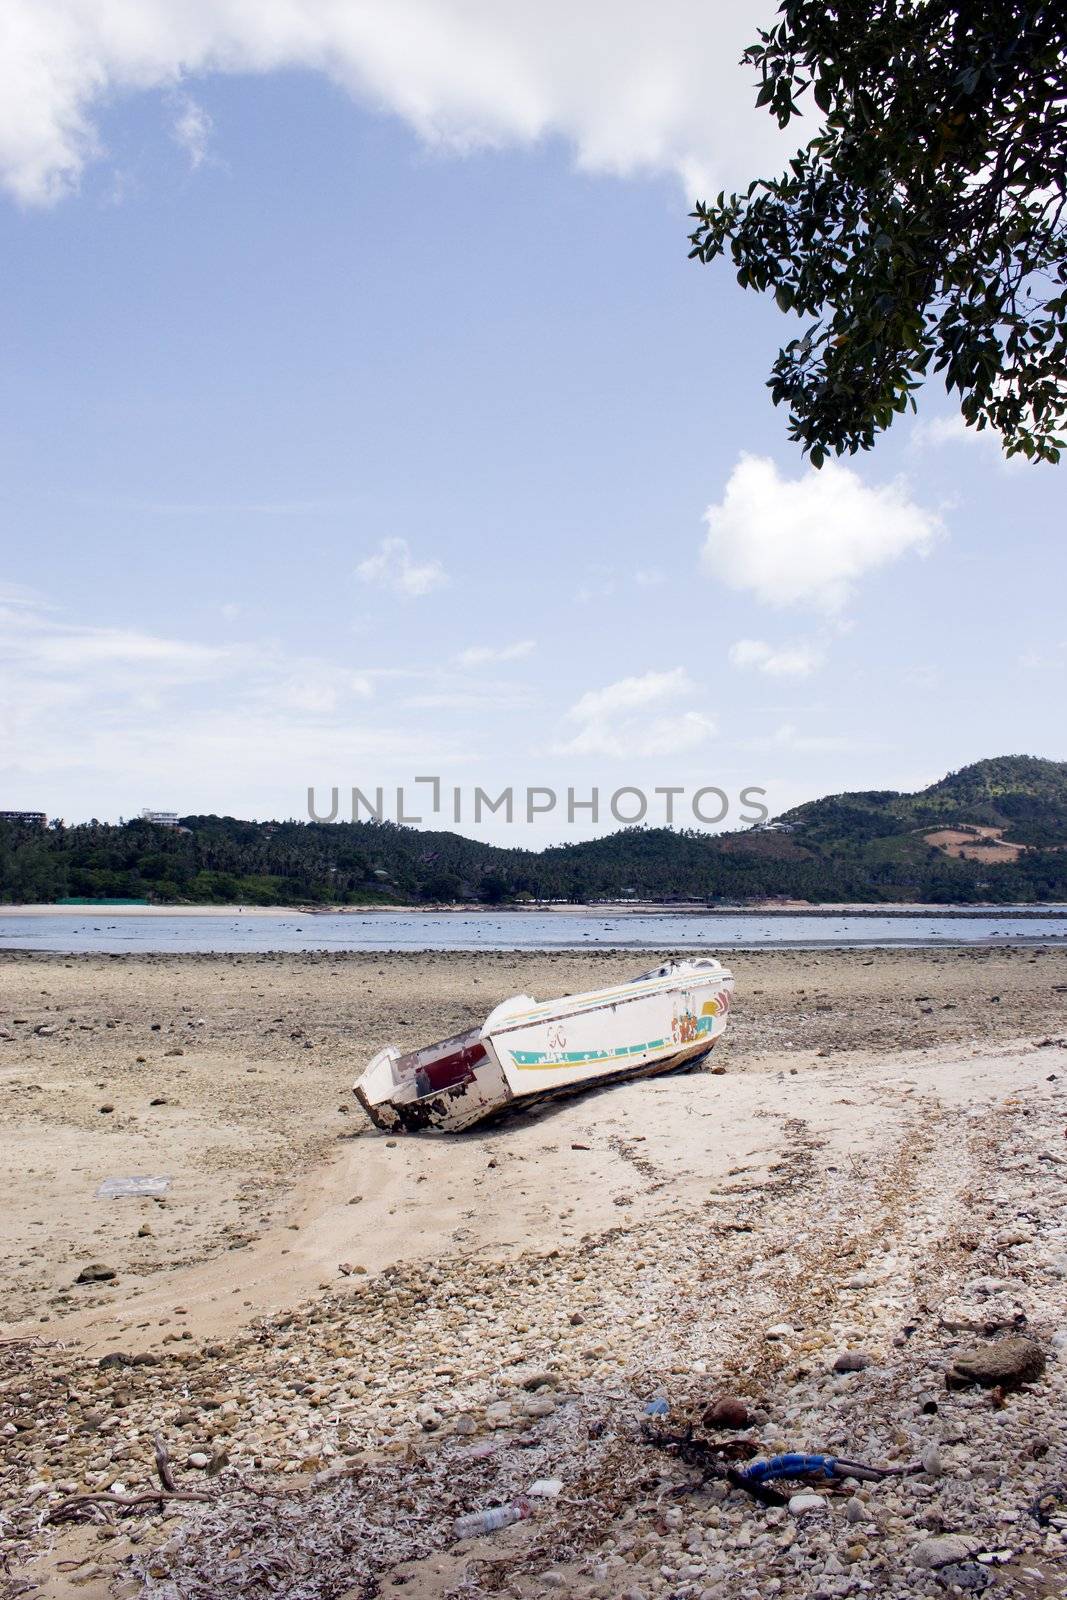 A speedboat wreck on the coast of Koh Samui, Thailand